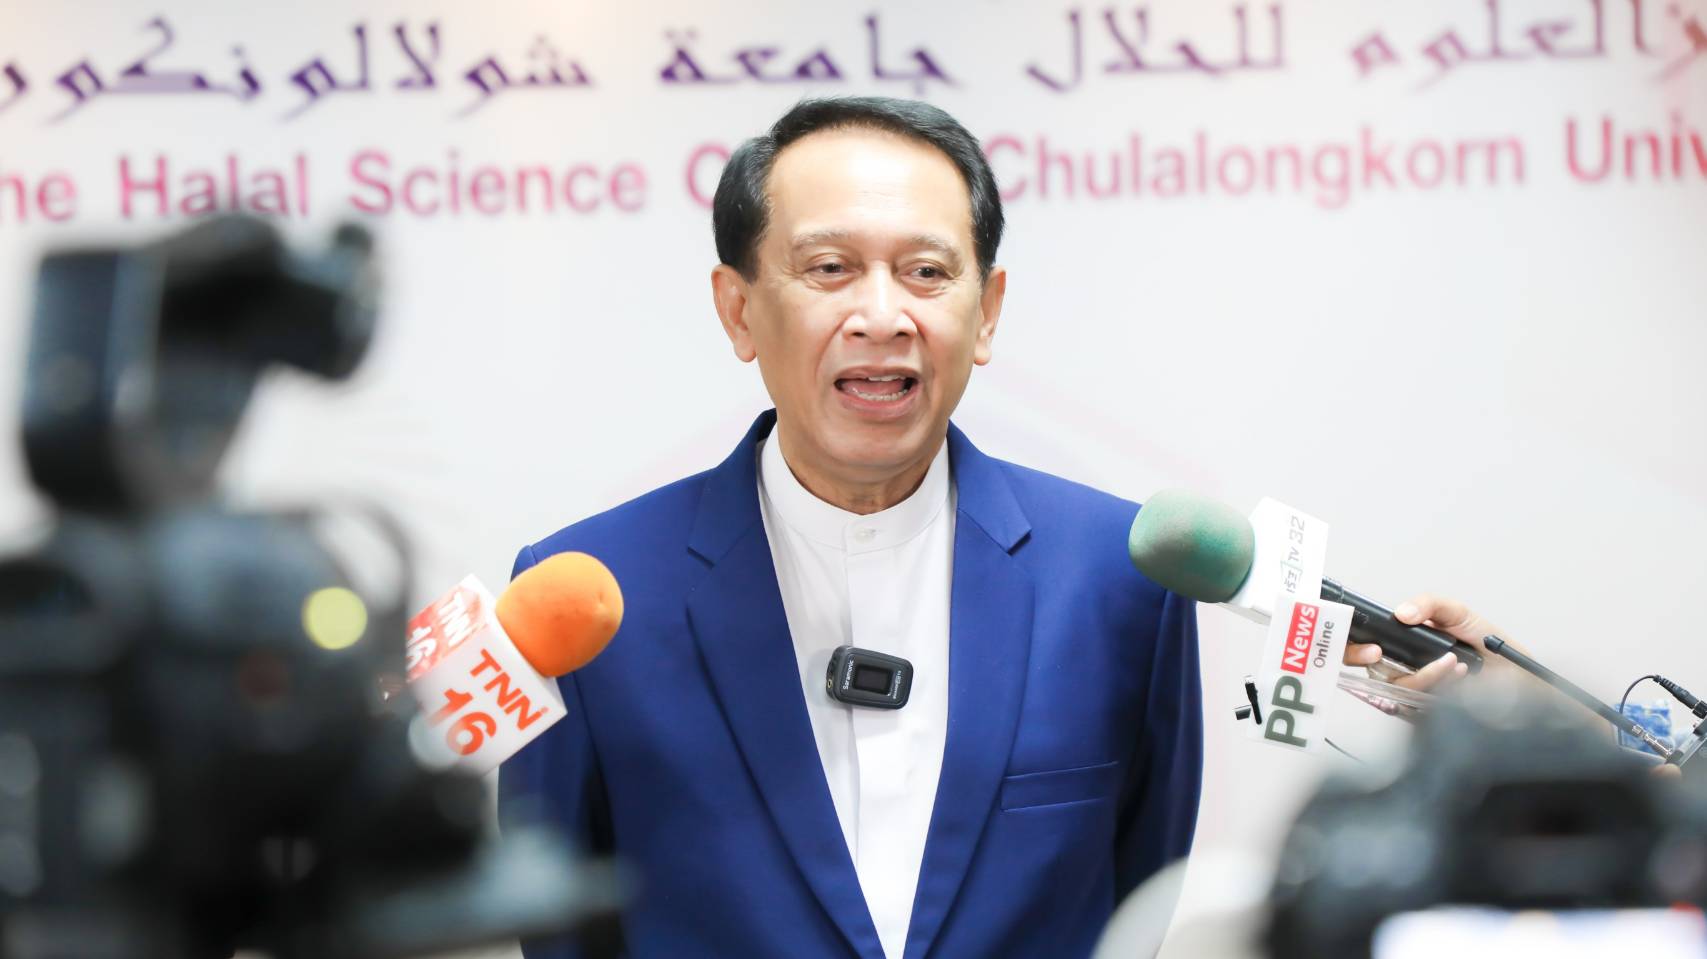 Thailand Halal Assembly 2021 พร้อมมุ่งสู่อนาคตของวงการฮาลาล